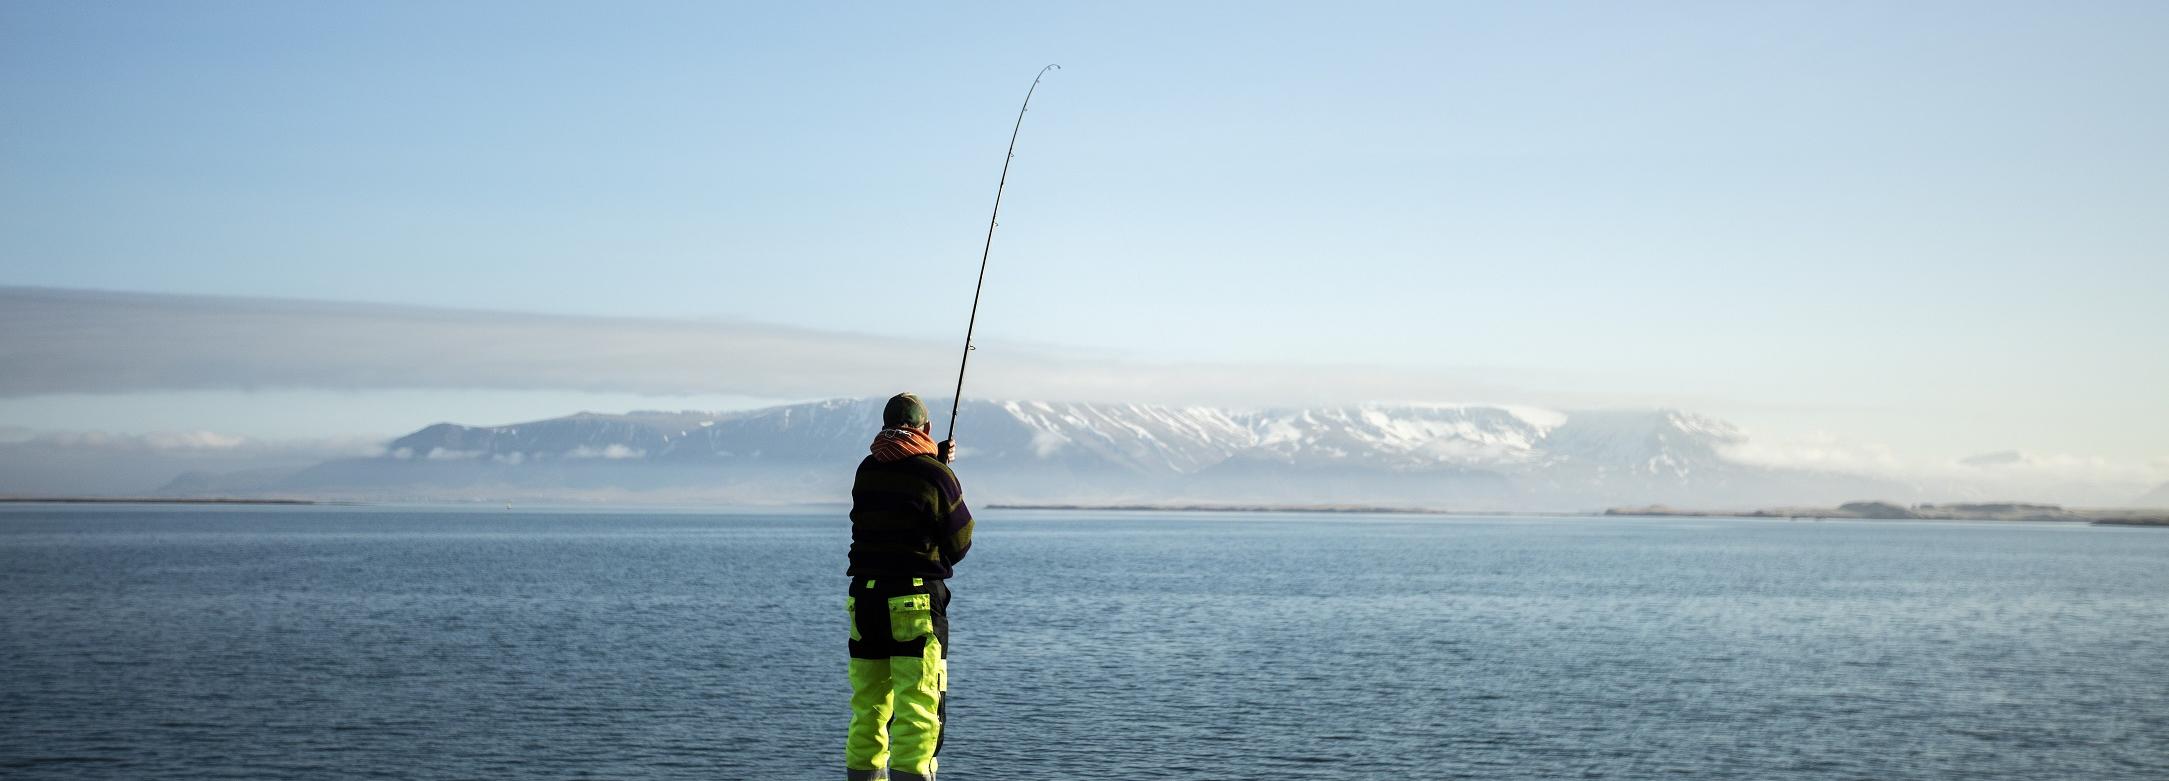 Fishing for icelandic cod © James Morgan for MSC